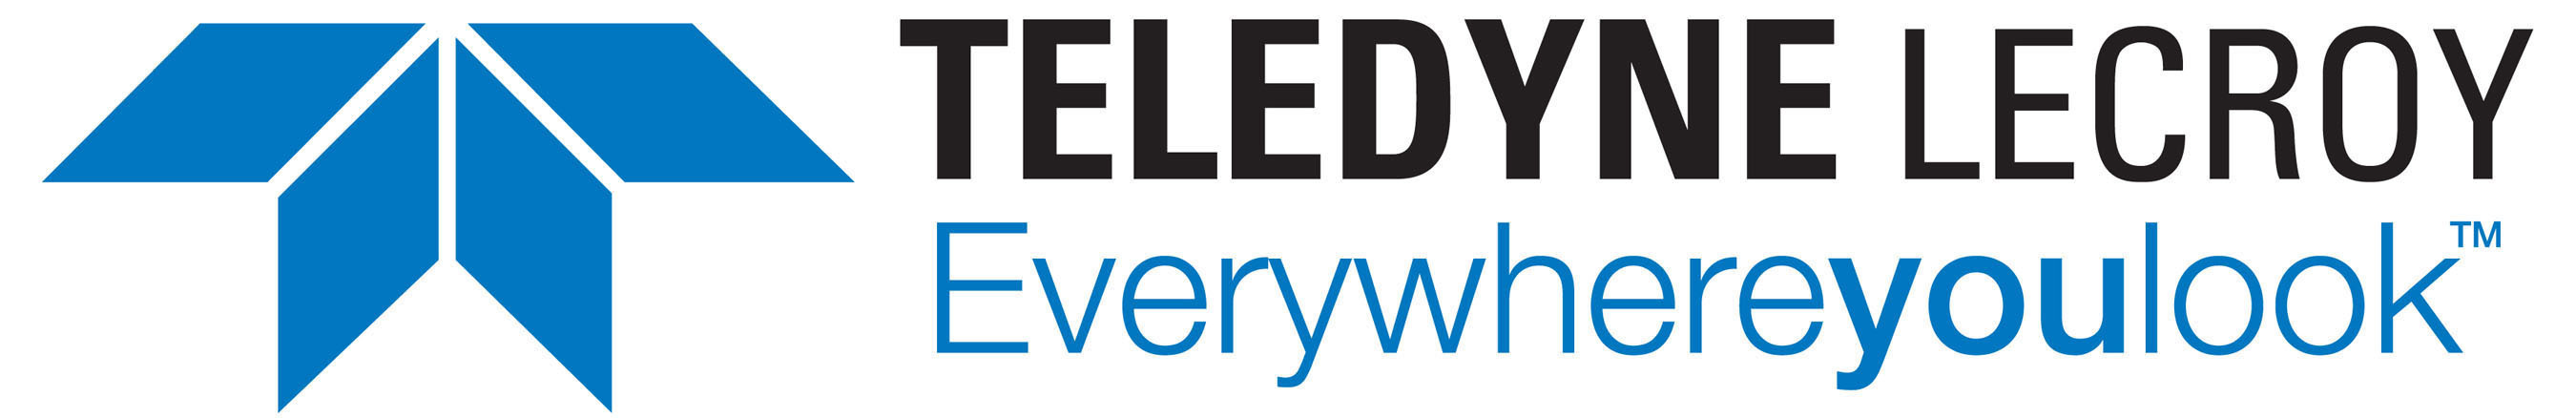 Teledyne-lecroy标志